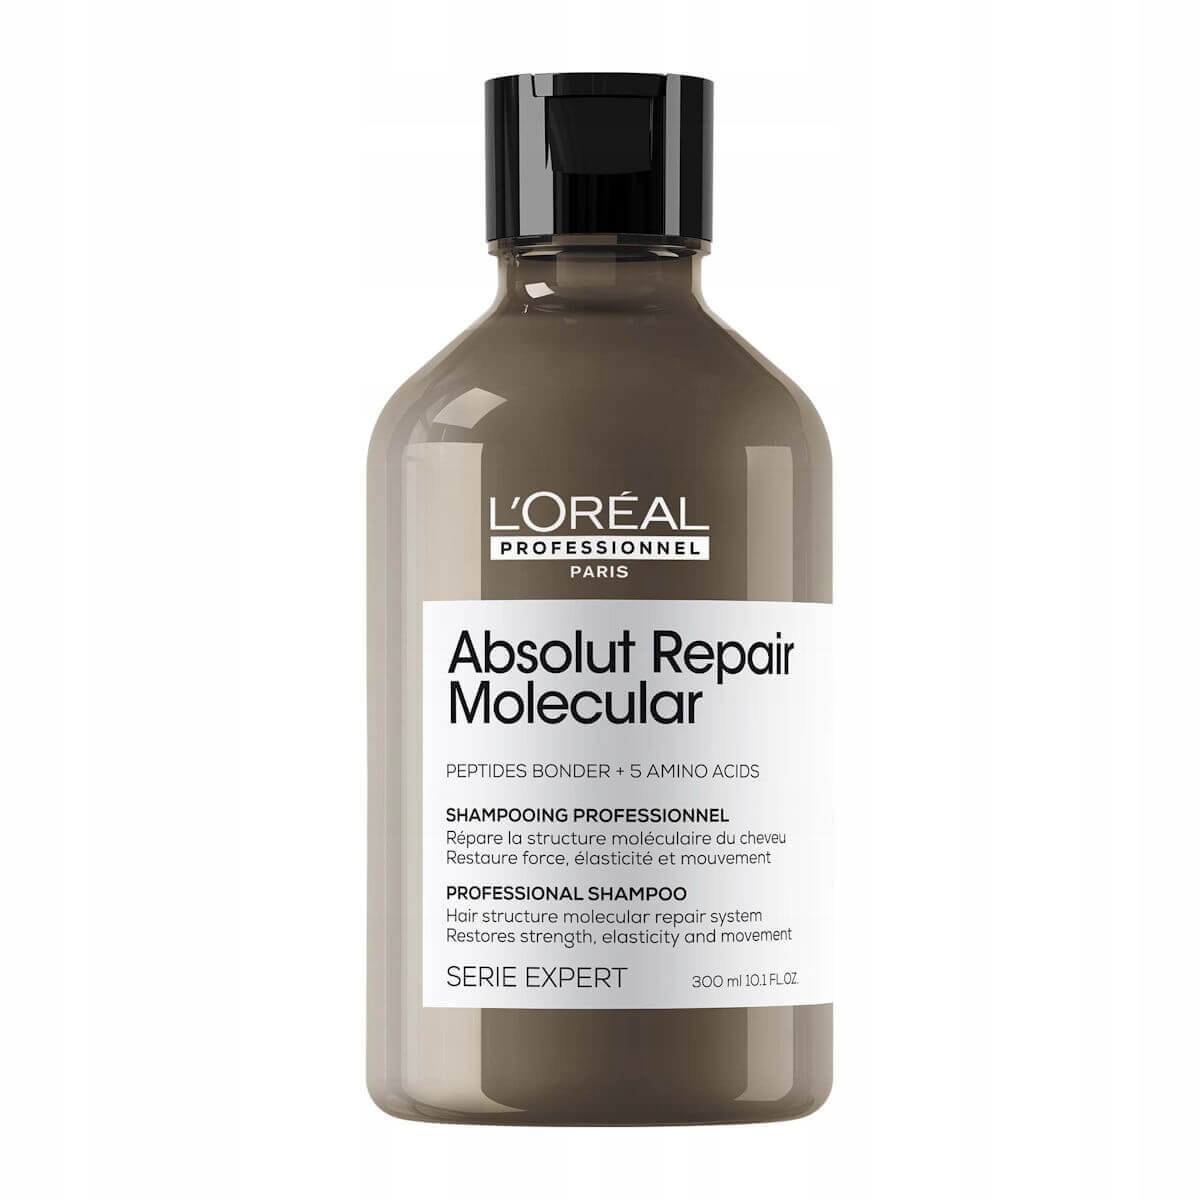 loreal absolut repair lipidium szampon allegro